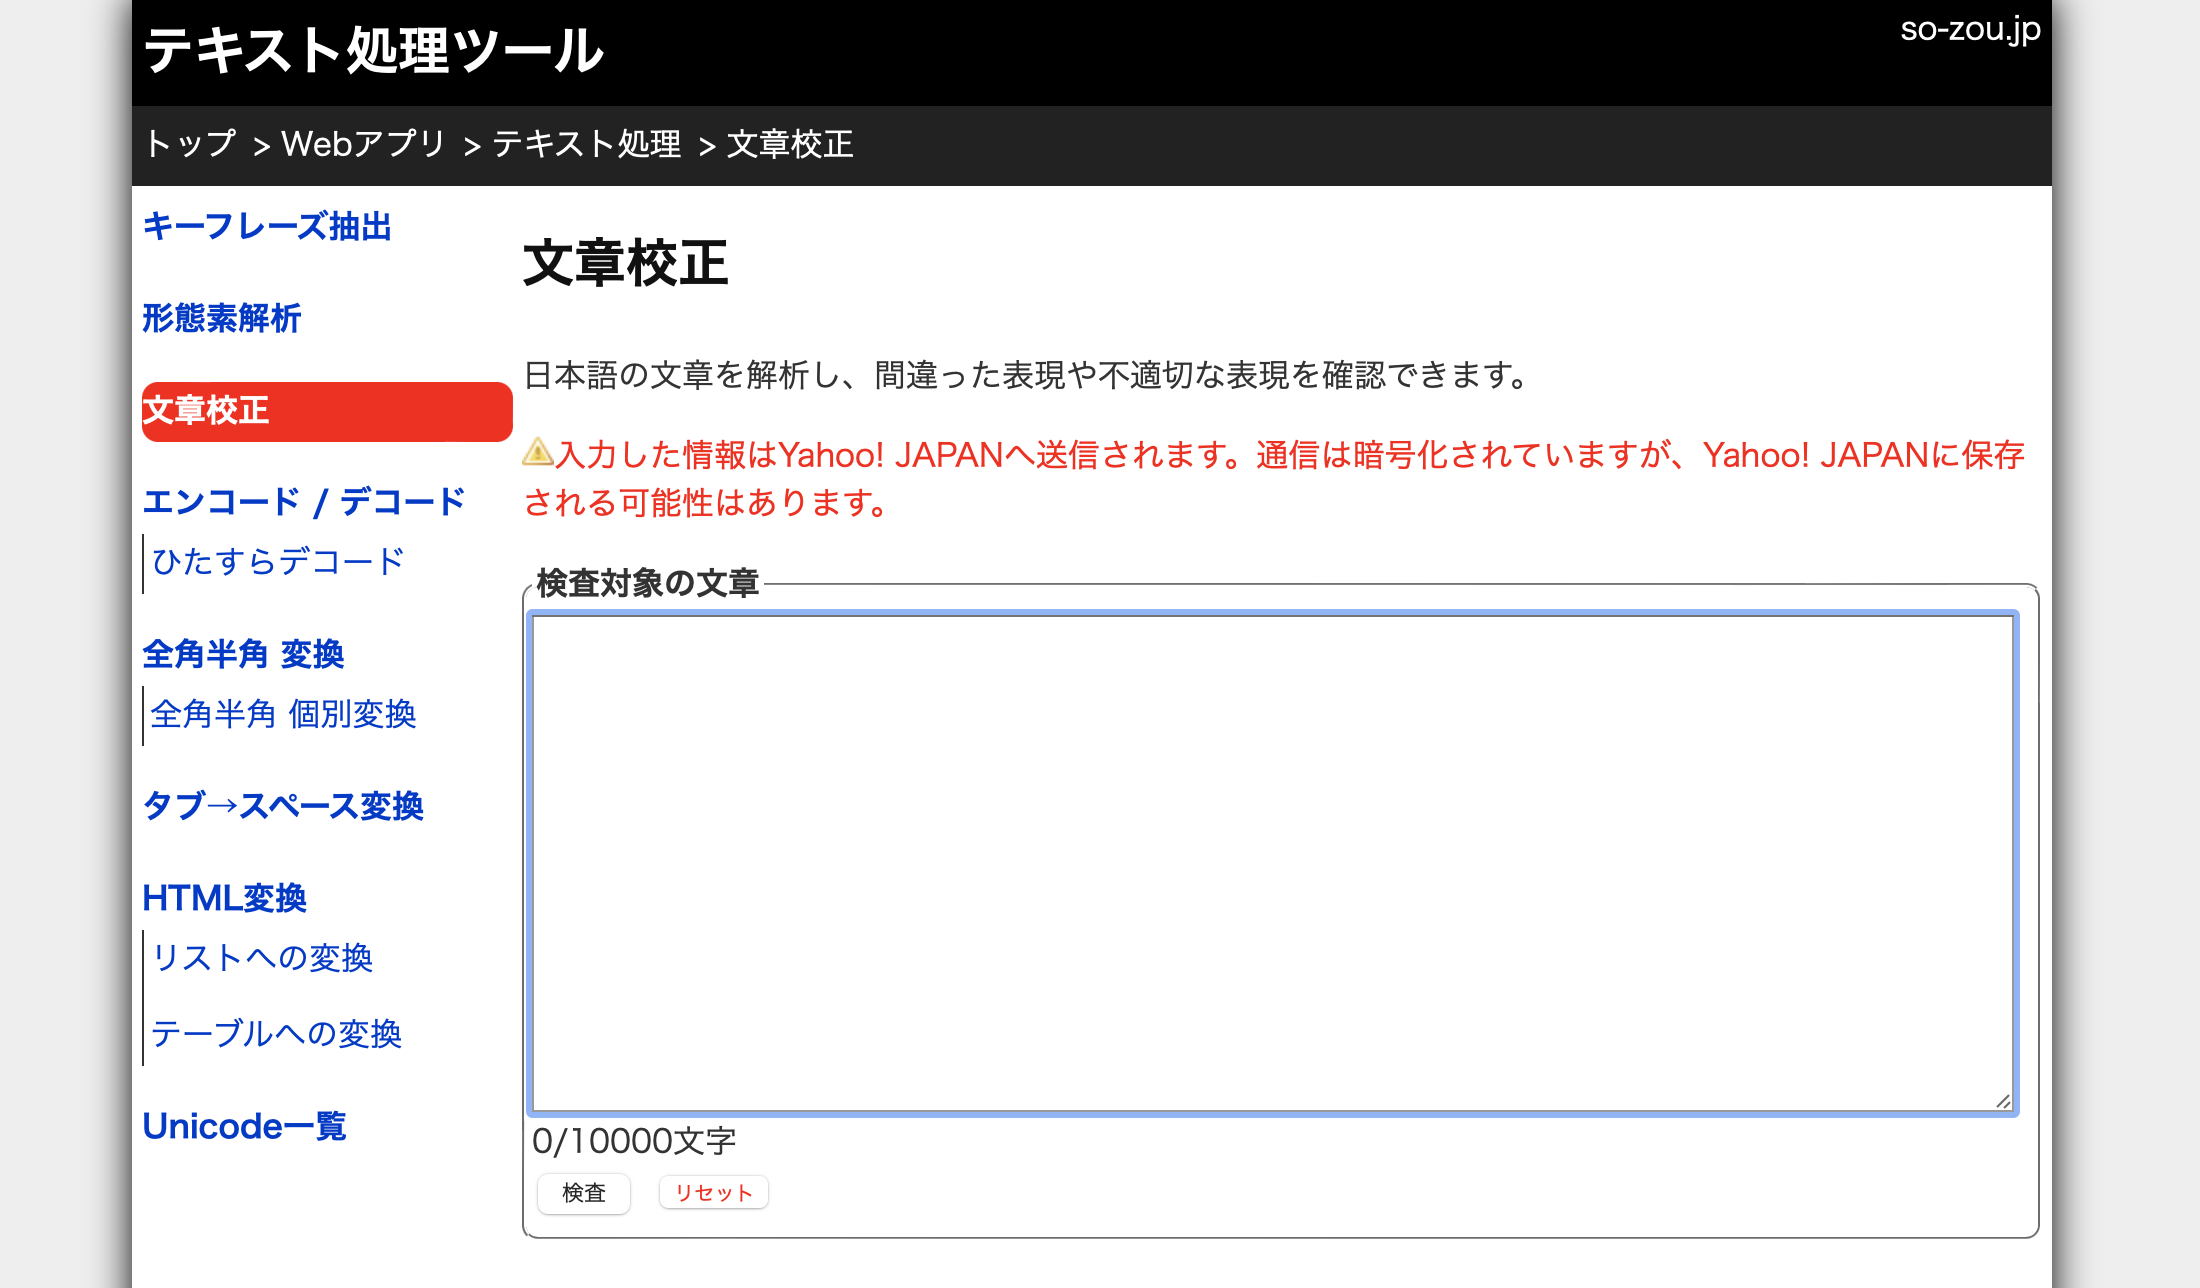 「so-zou.jp」参考サイト：https://so-zou.jp/web-app/text/proofreading/